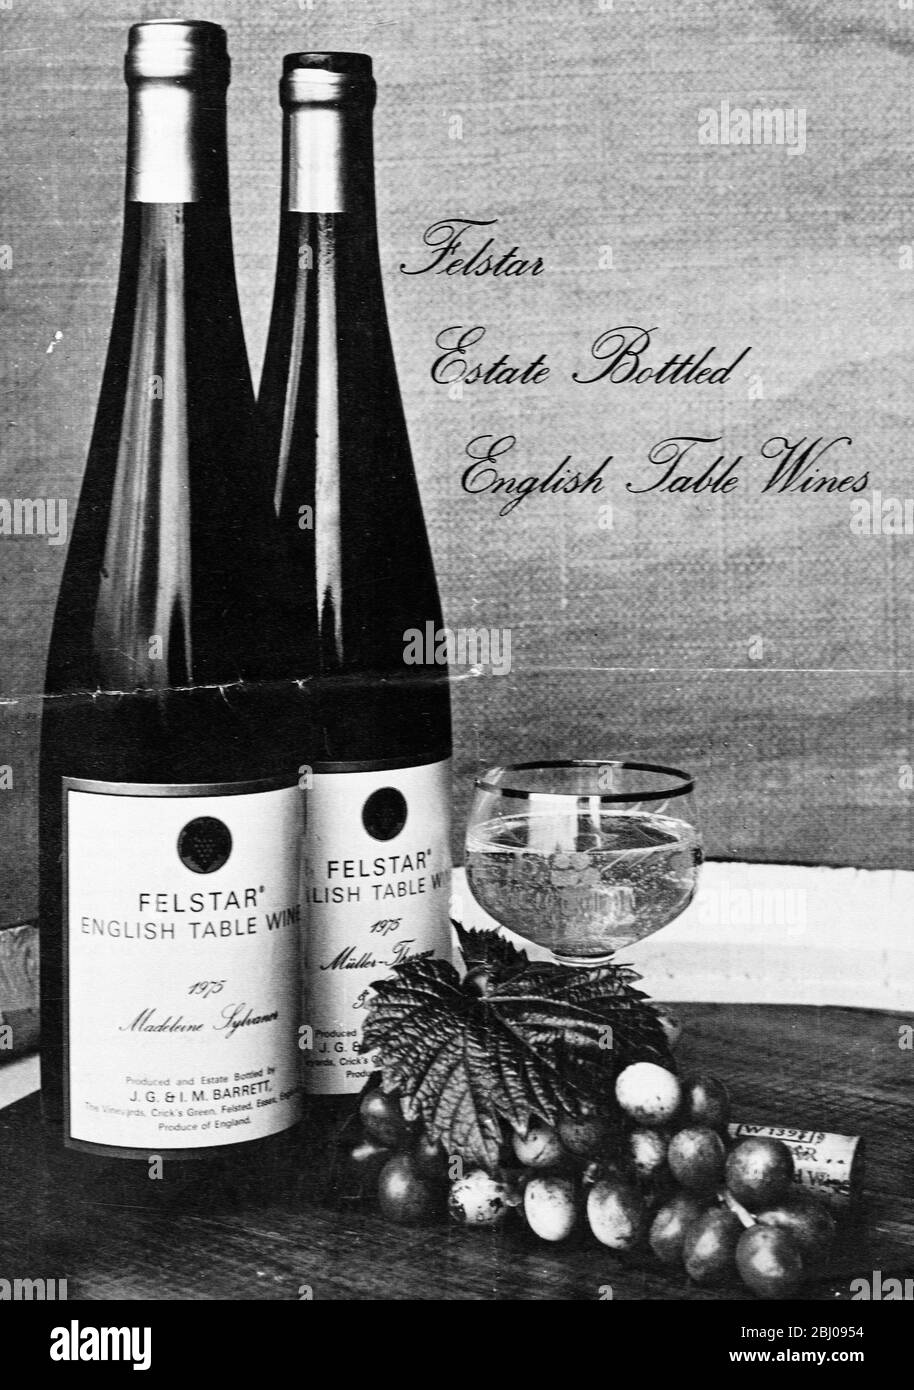 Felstar Estate bottiglia di vino da tavola inglese. Prodotto da J.G. E I.M. Barrett a Cricks Green, Felsted, Essex. Foto Stock